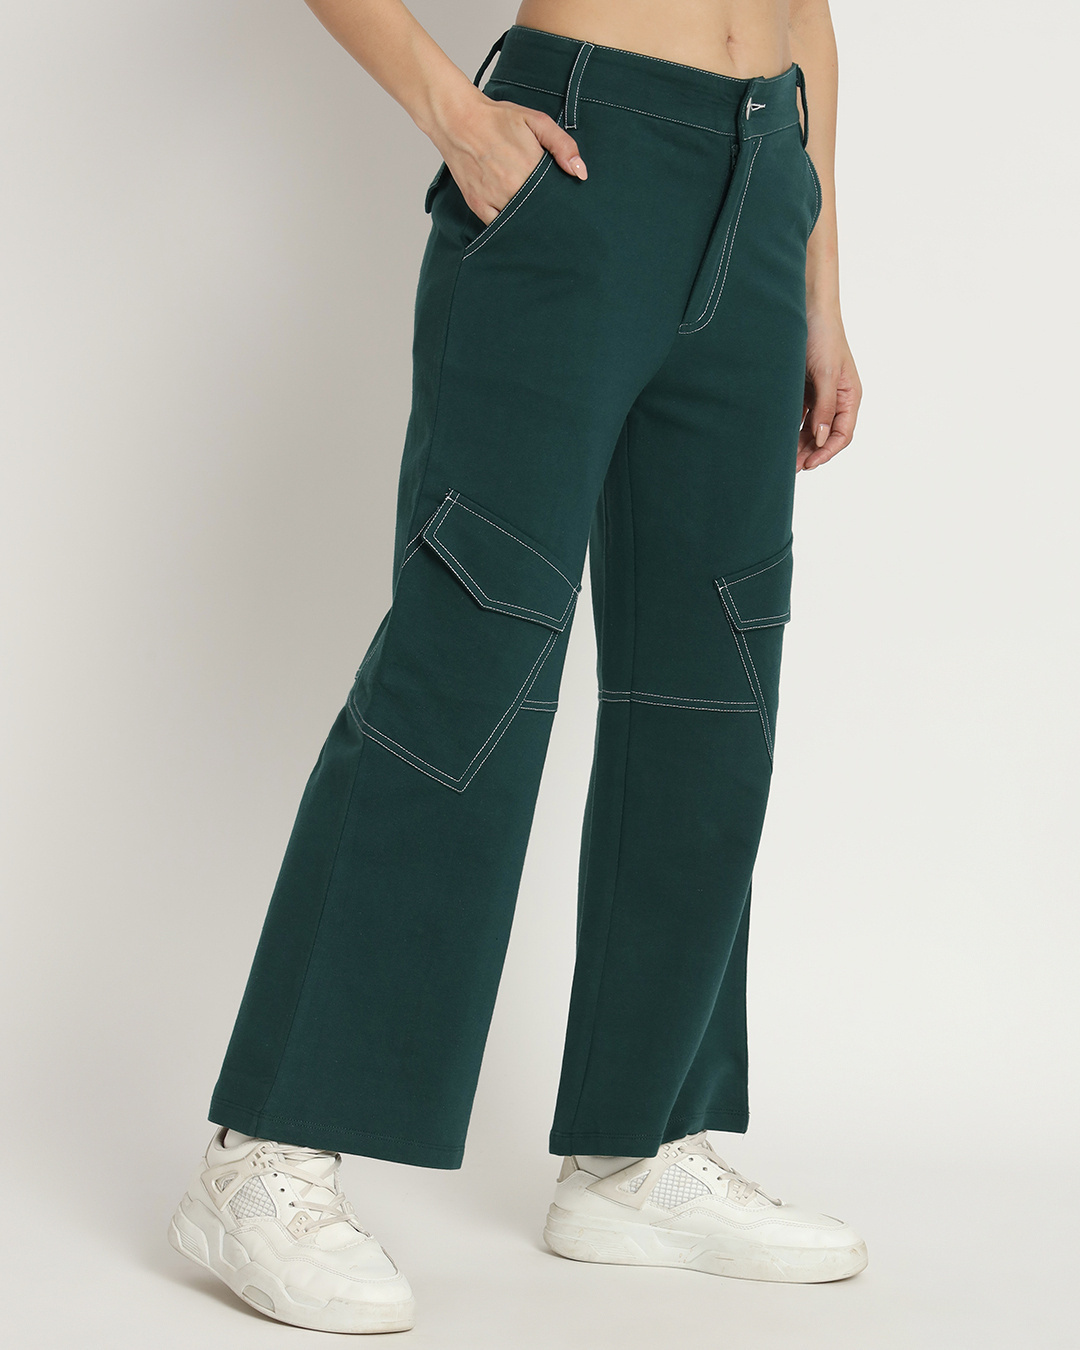 Buy Women's Green Flared Cargo Track Pants Online at Bewakoof